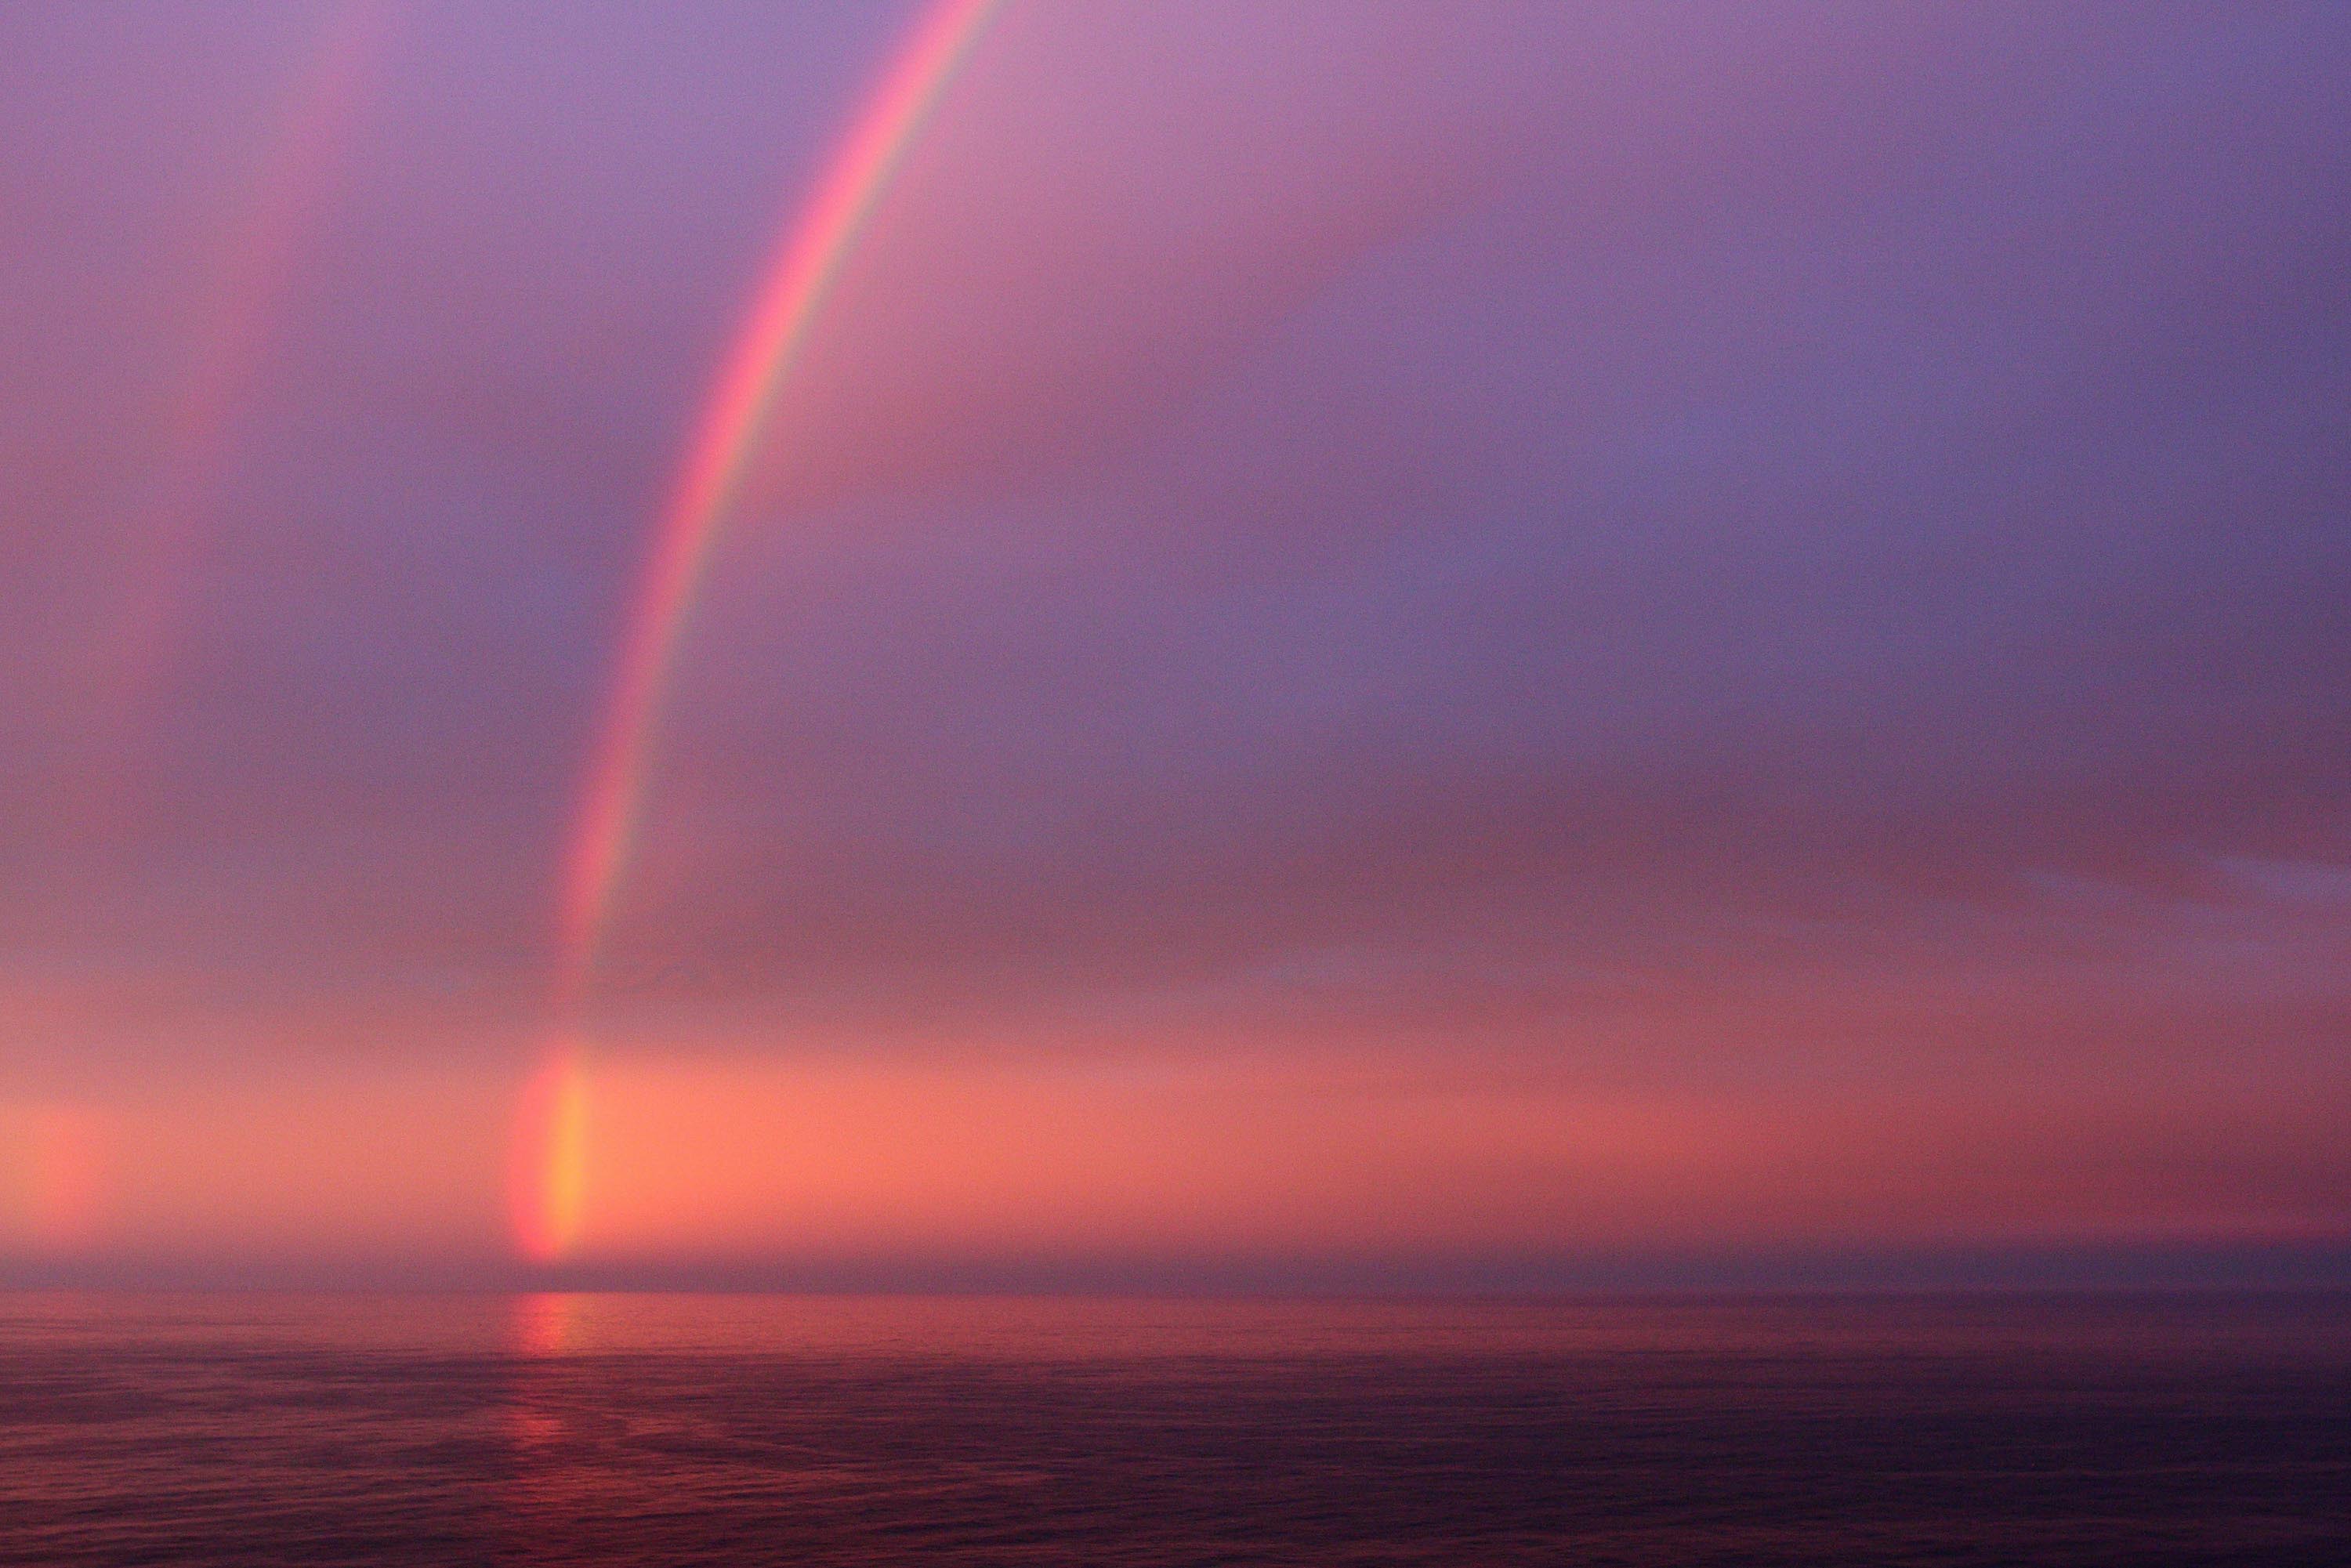 Double rainbow in the sea